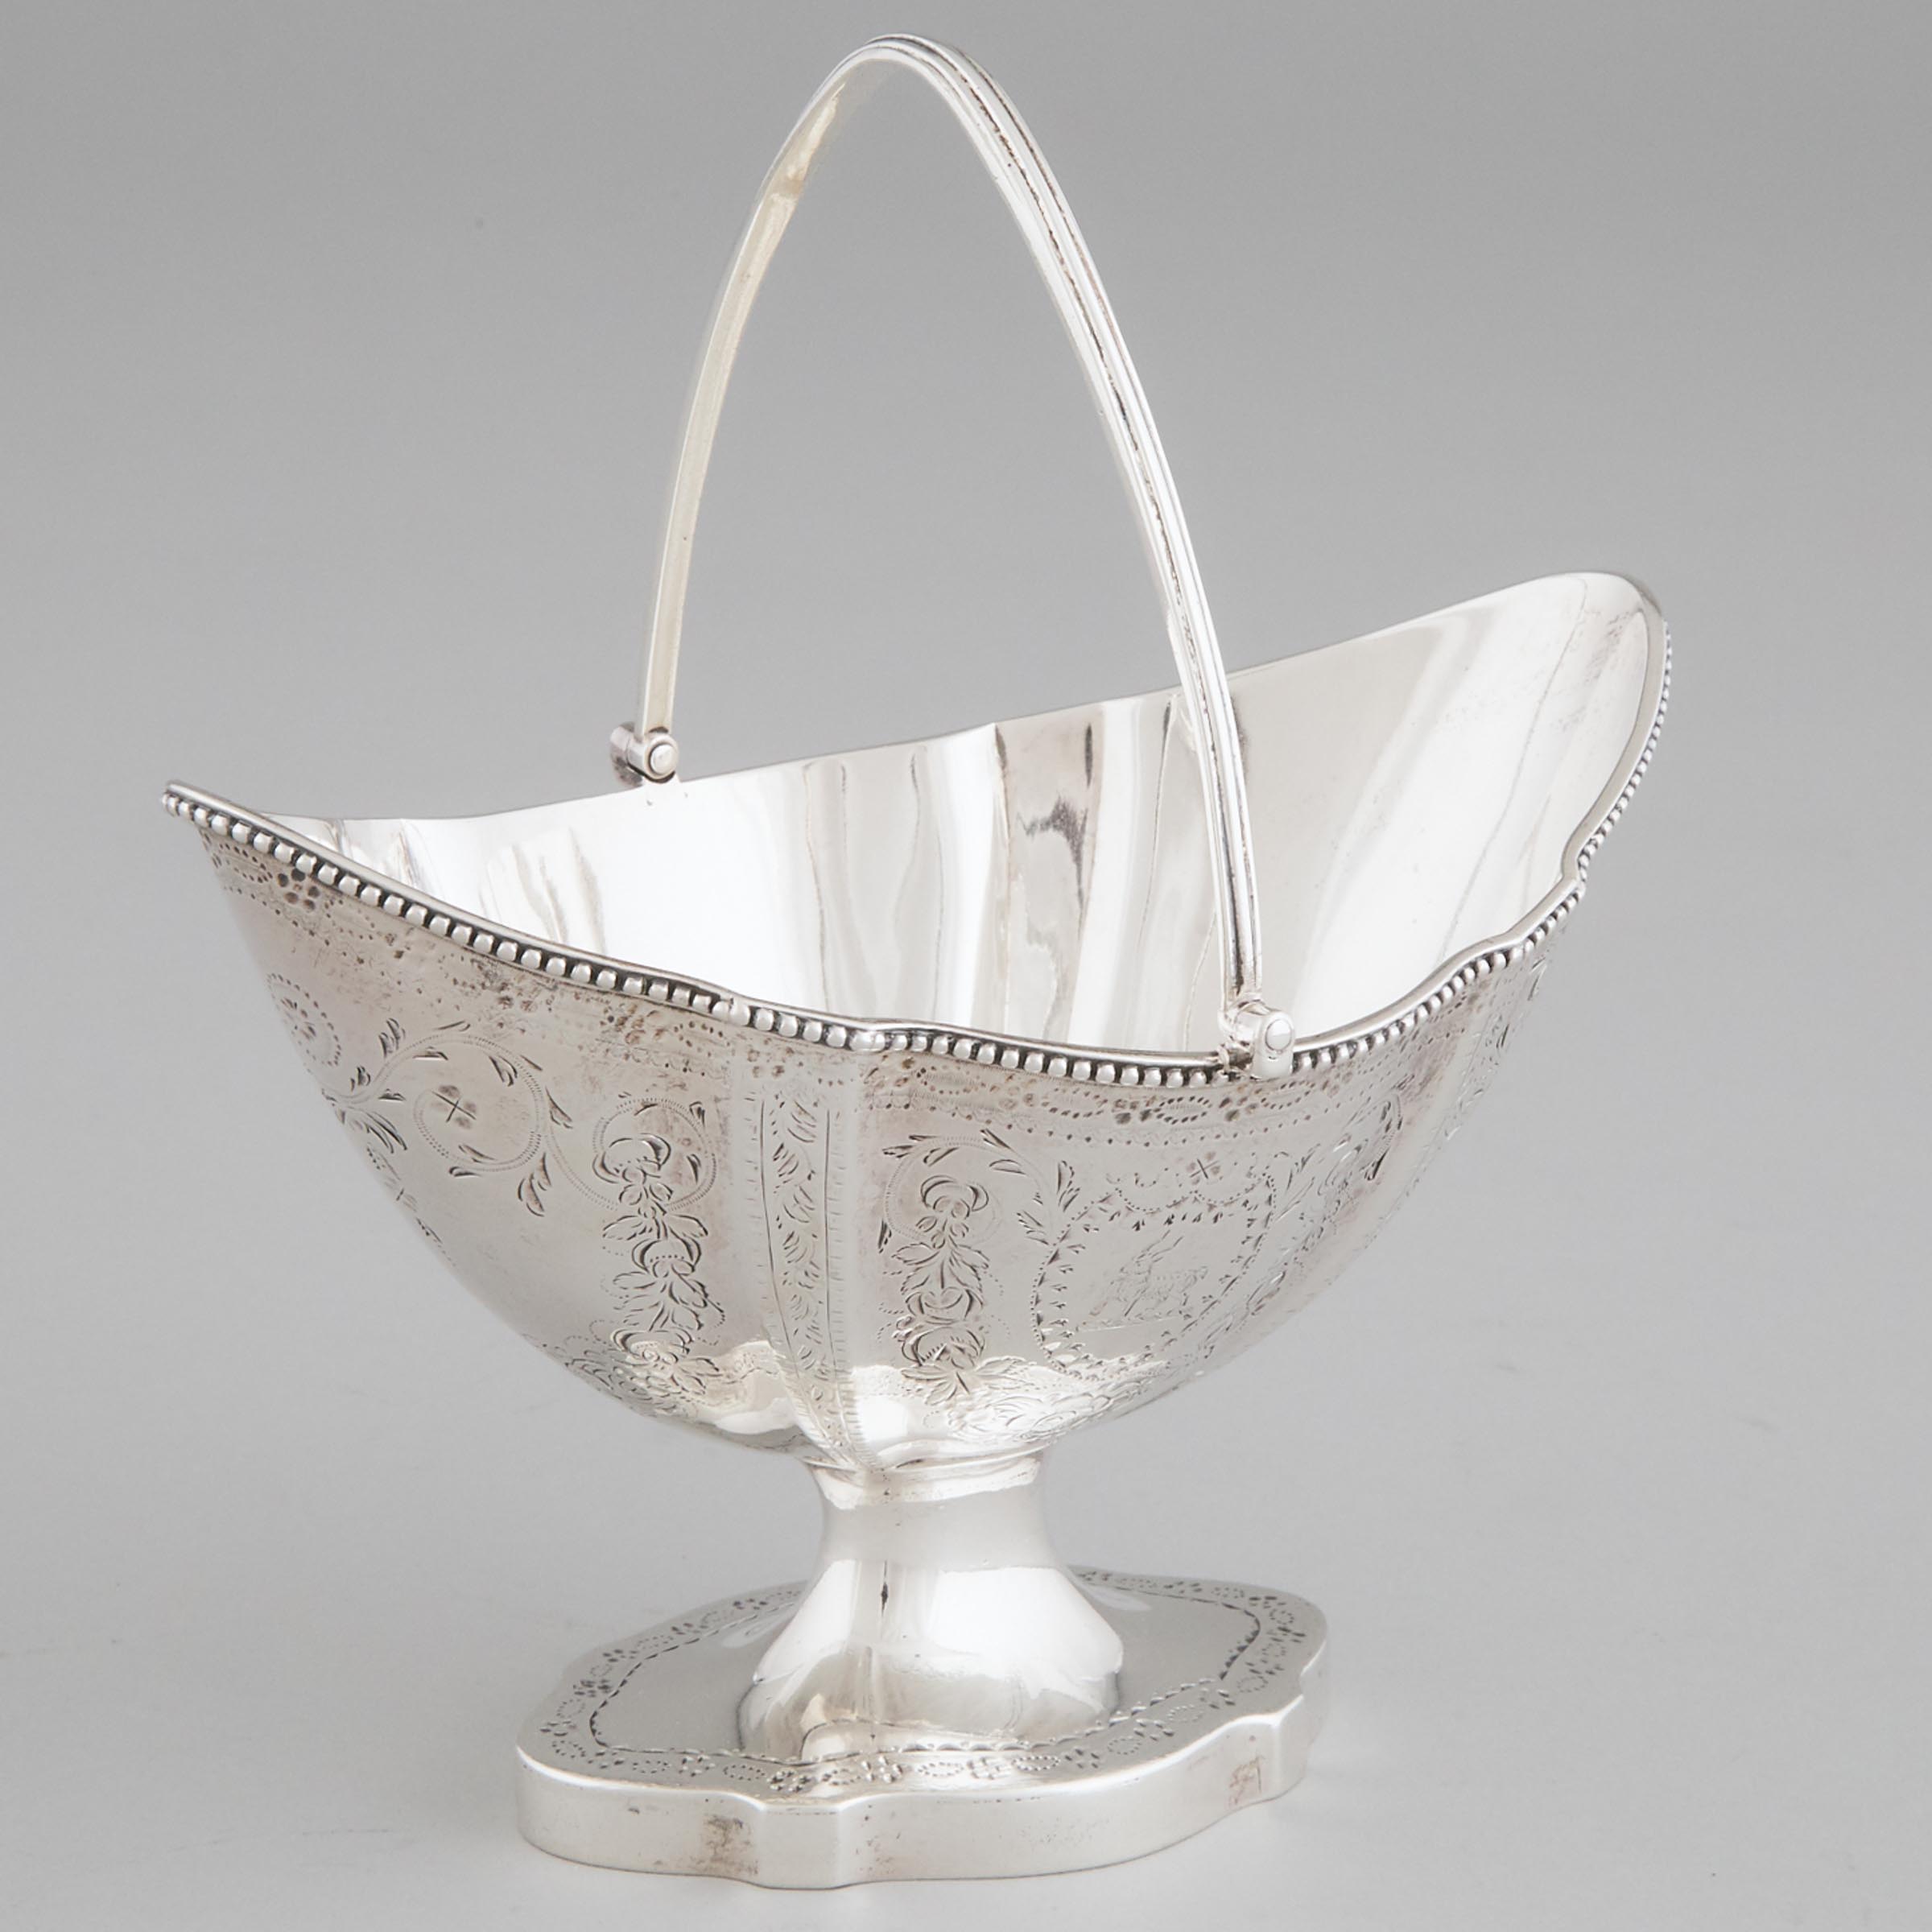 George III Silver Bright-Cut Shaped Oval Sugar Basket, Henry Chawner, London, 1786